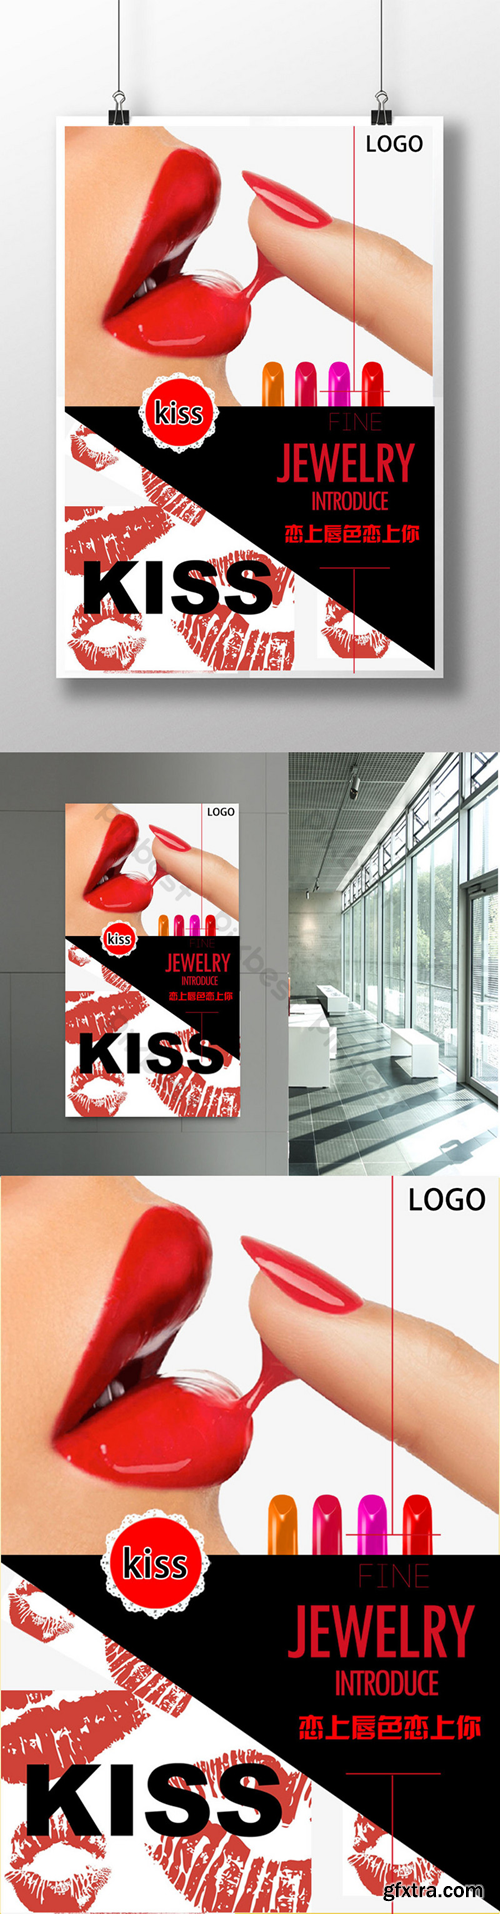 Fashion Makeup Lipstick Promotion Poster Template PSD